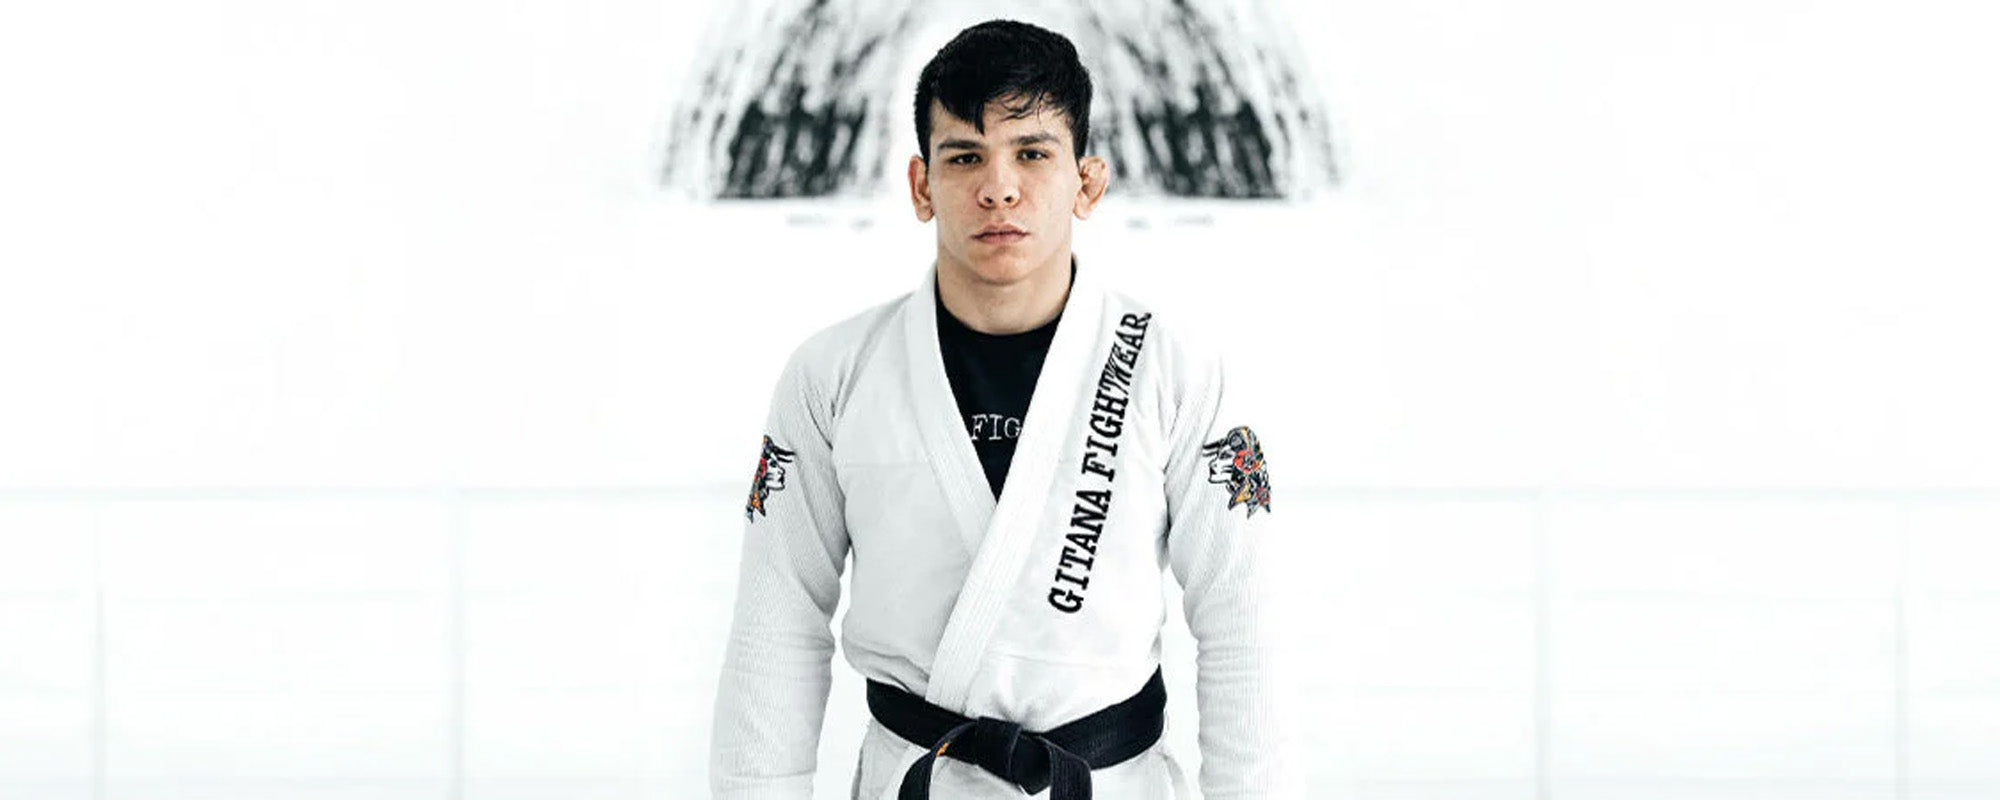 Diego ‘’Pato’’ Oliveira - BJJ Black Belt World Champion